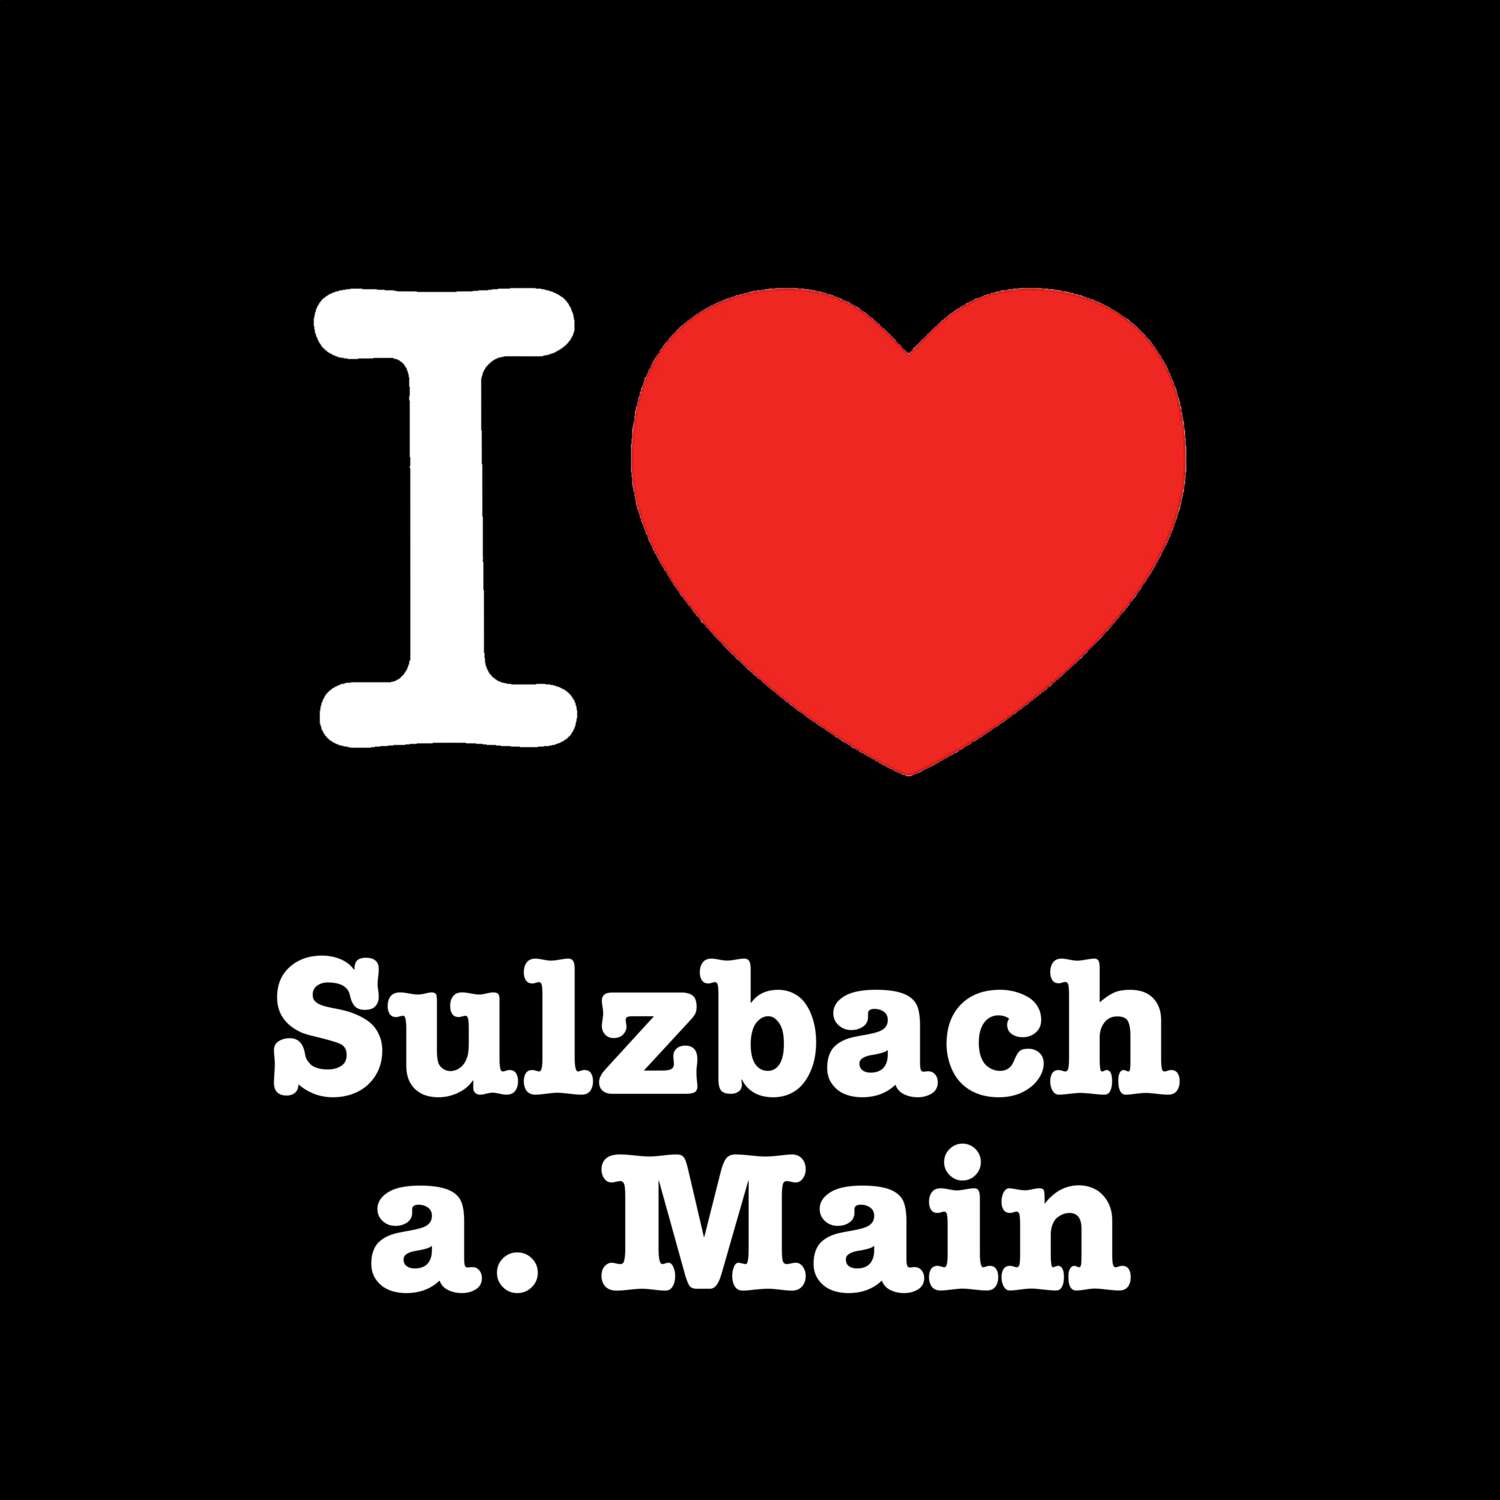 Sulzbach a. Main T-Shirt »I love«